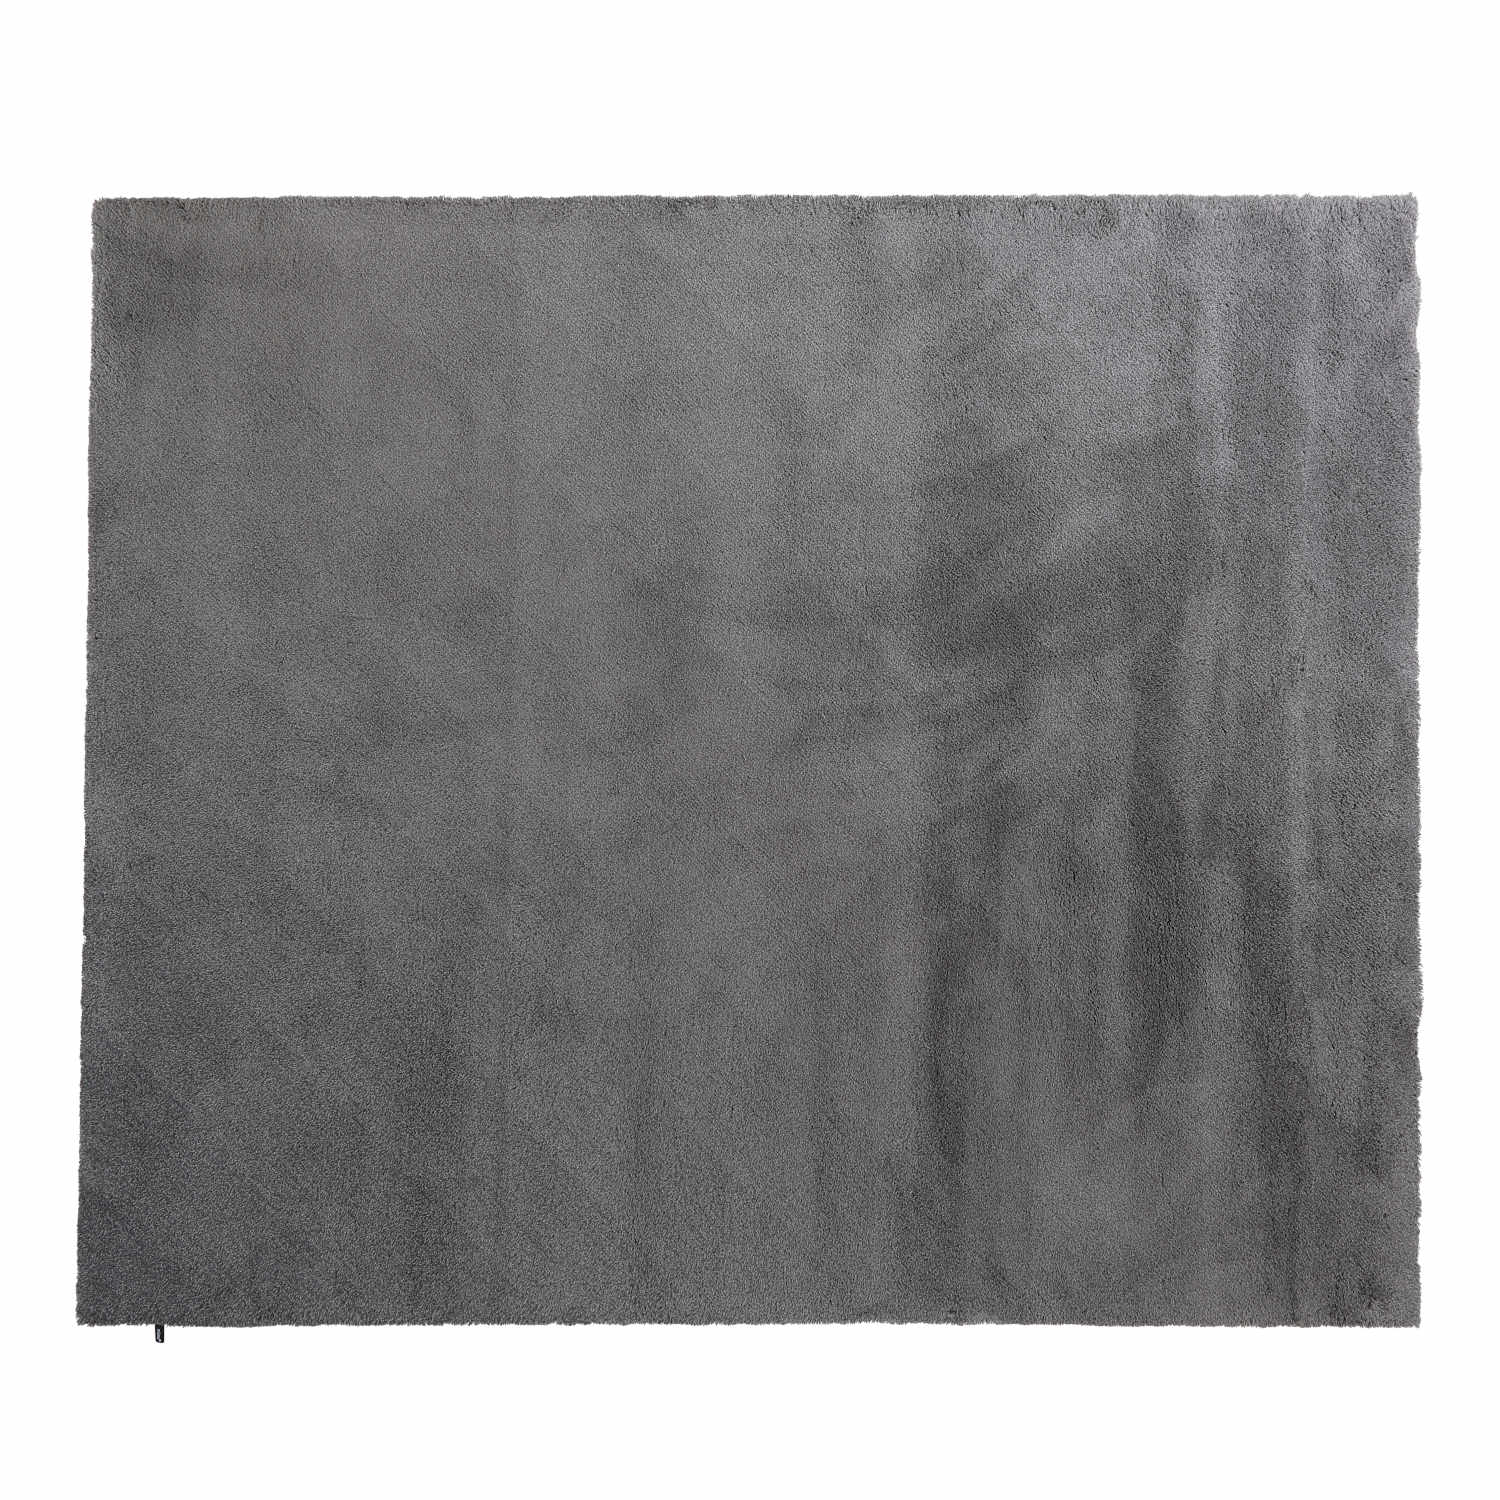 Coality Teppich, Grösse 300 x 400 cm, Farbe storm von miinu